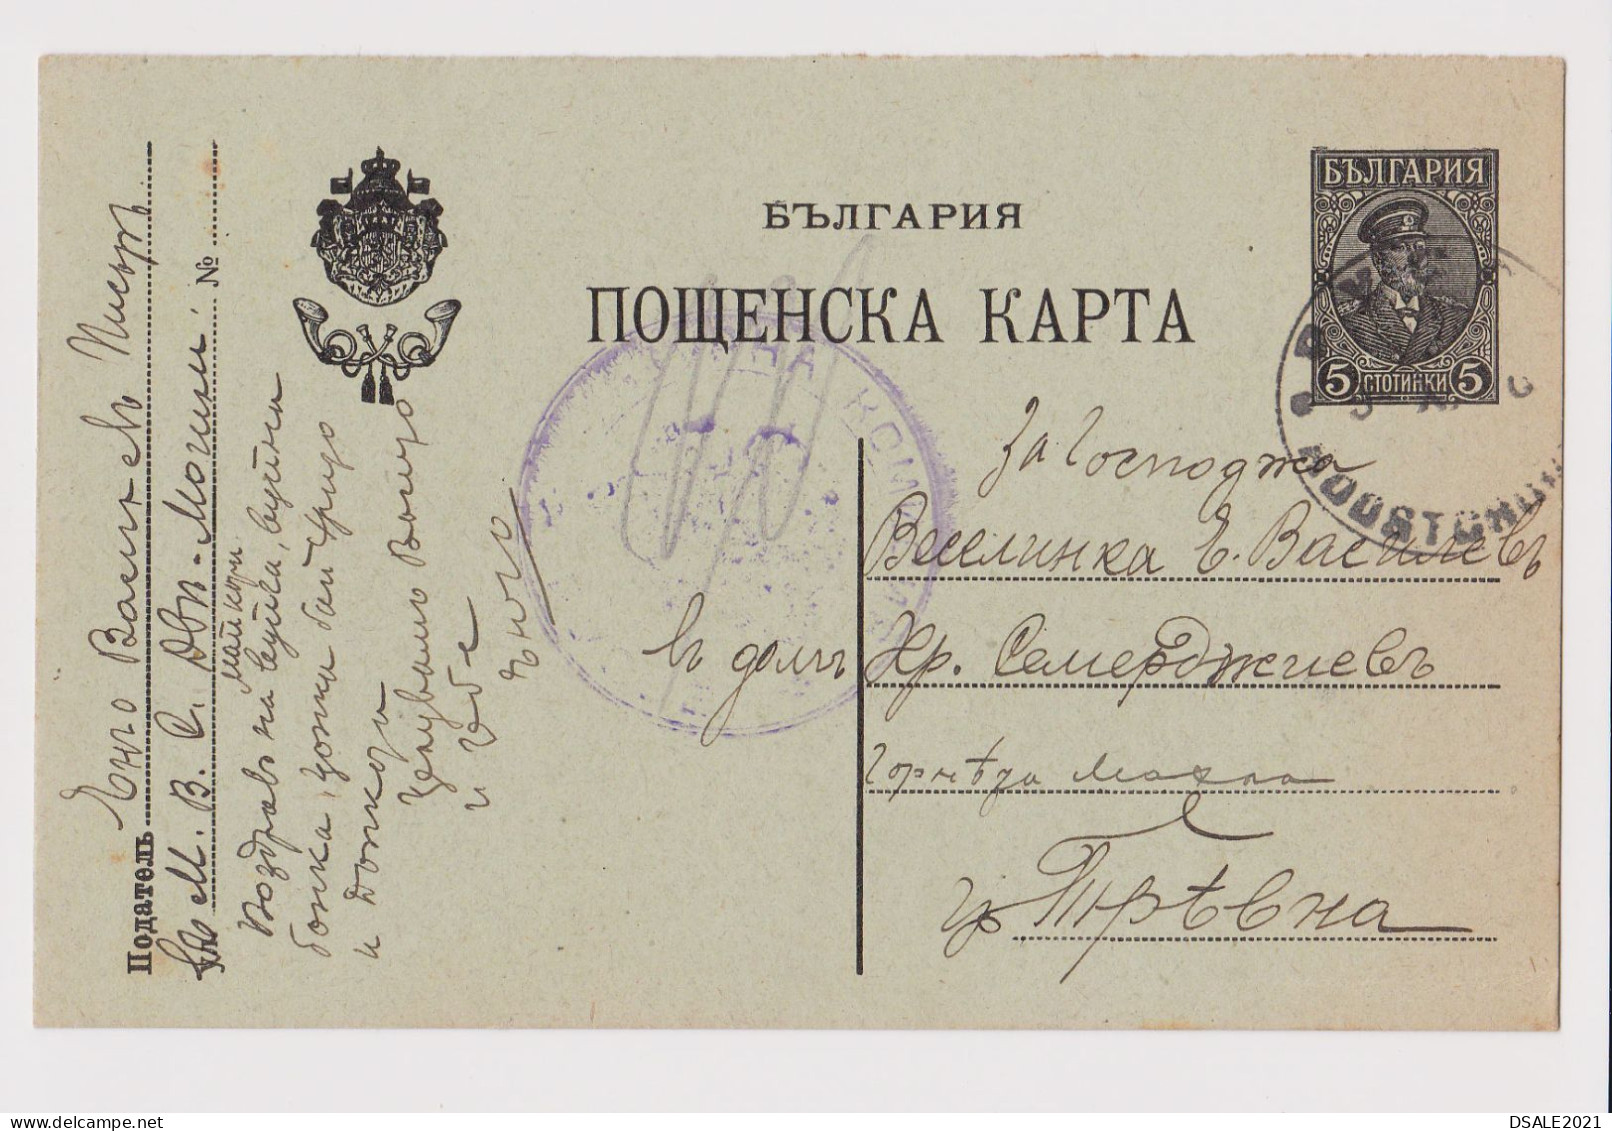 Bulgaria Bulgarie Bulgarien Ww1 Postal Stationery Card PSC, Entier, Civil Censored ROUSE Sent To Triavna (36523) - Cartes Postales